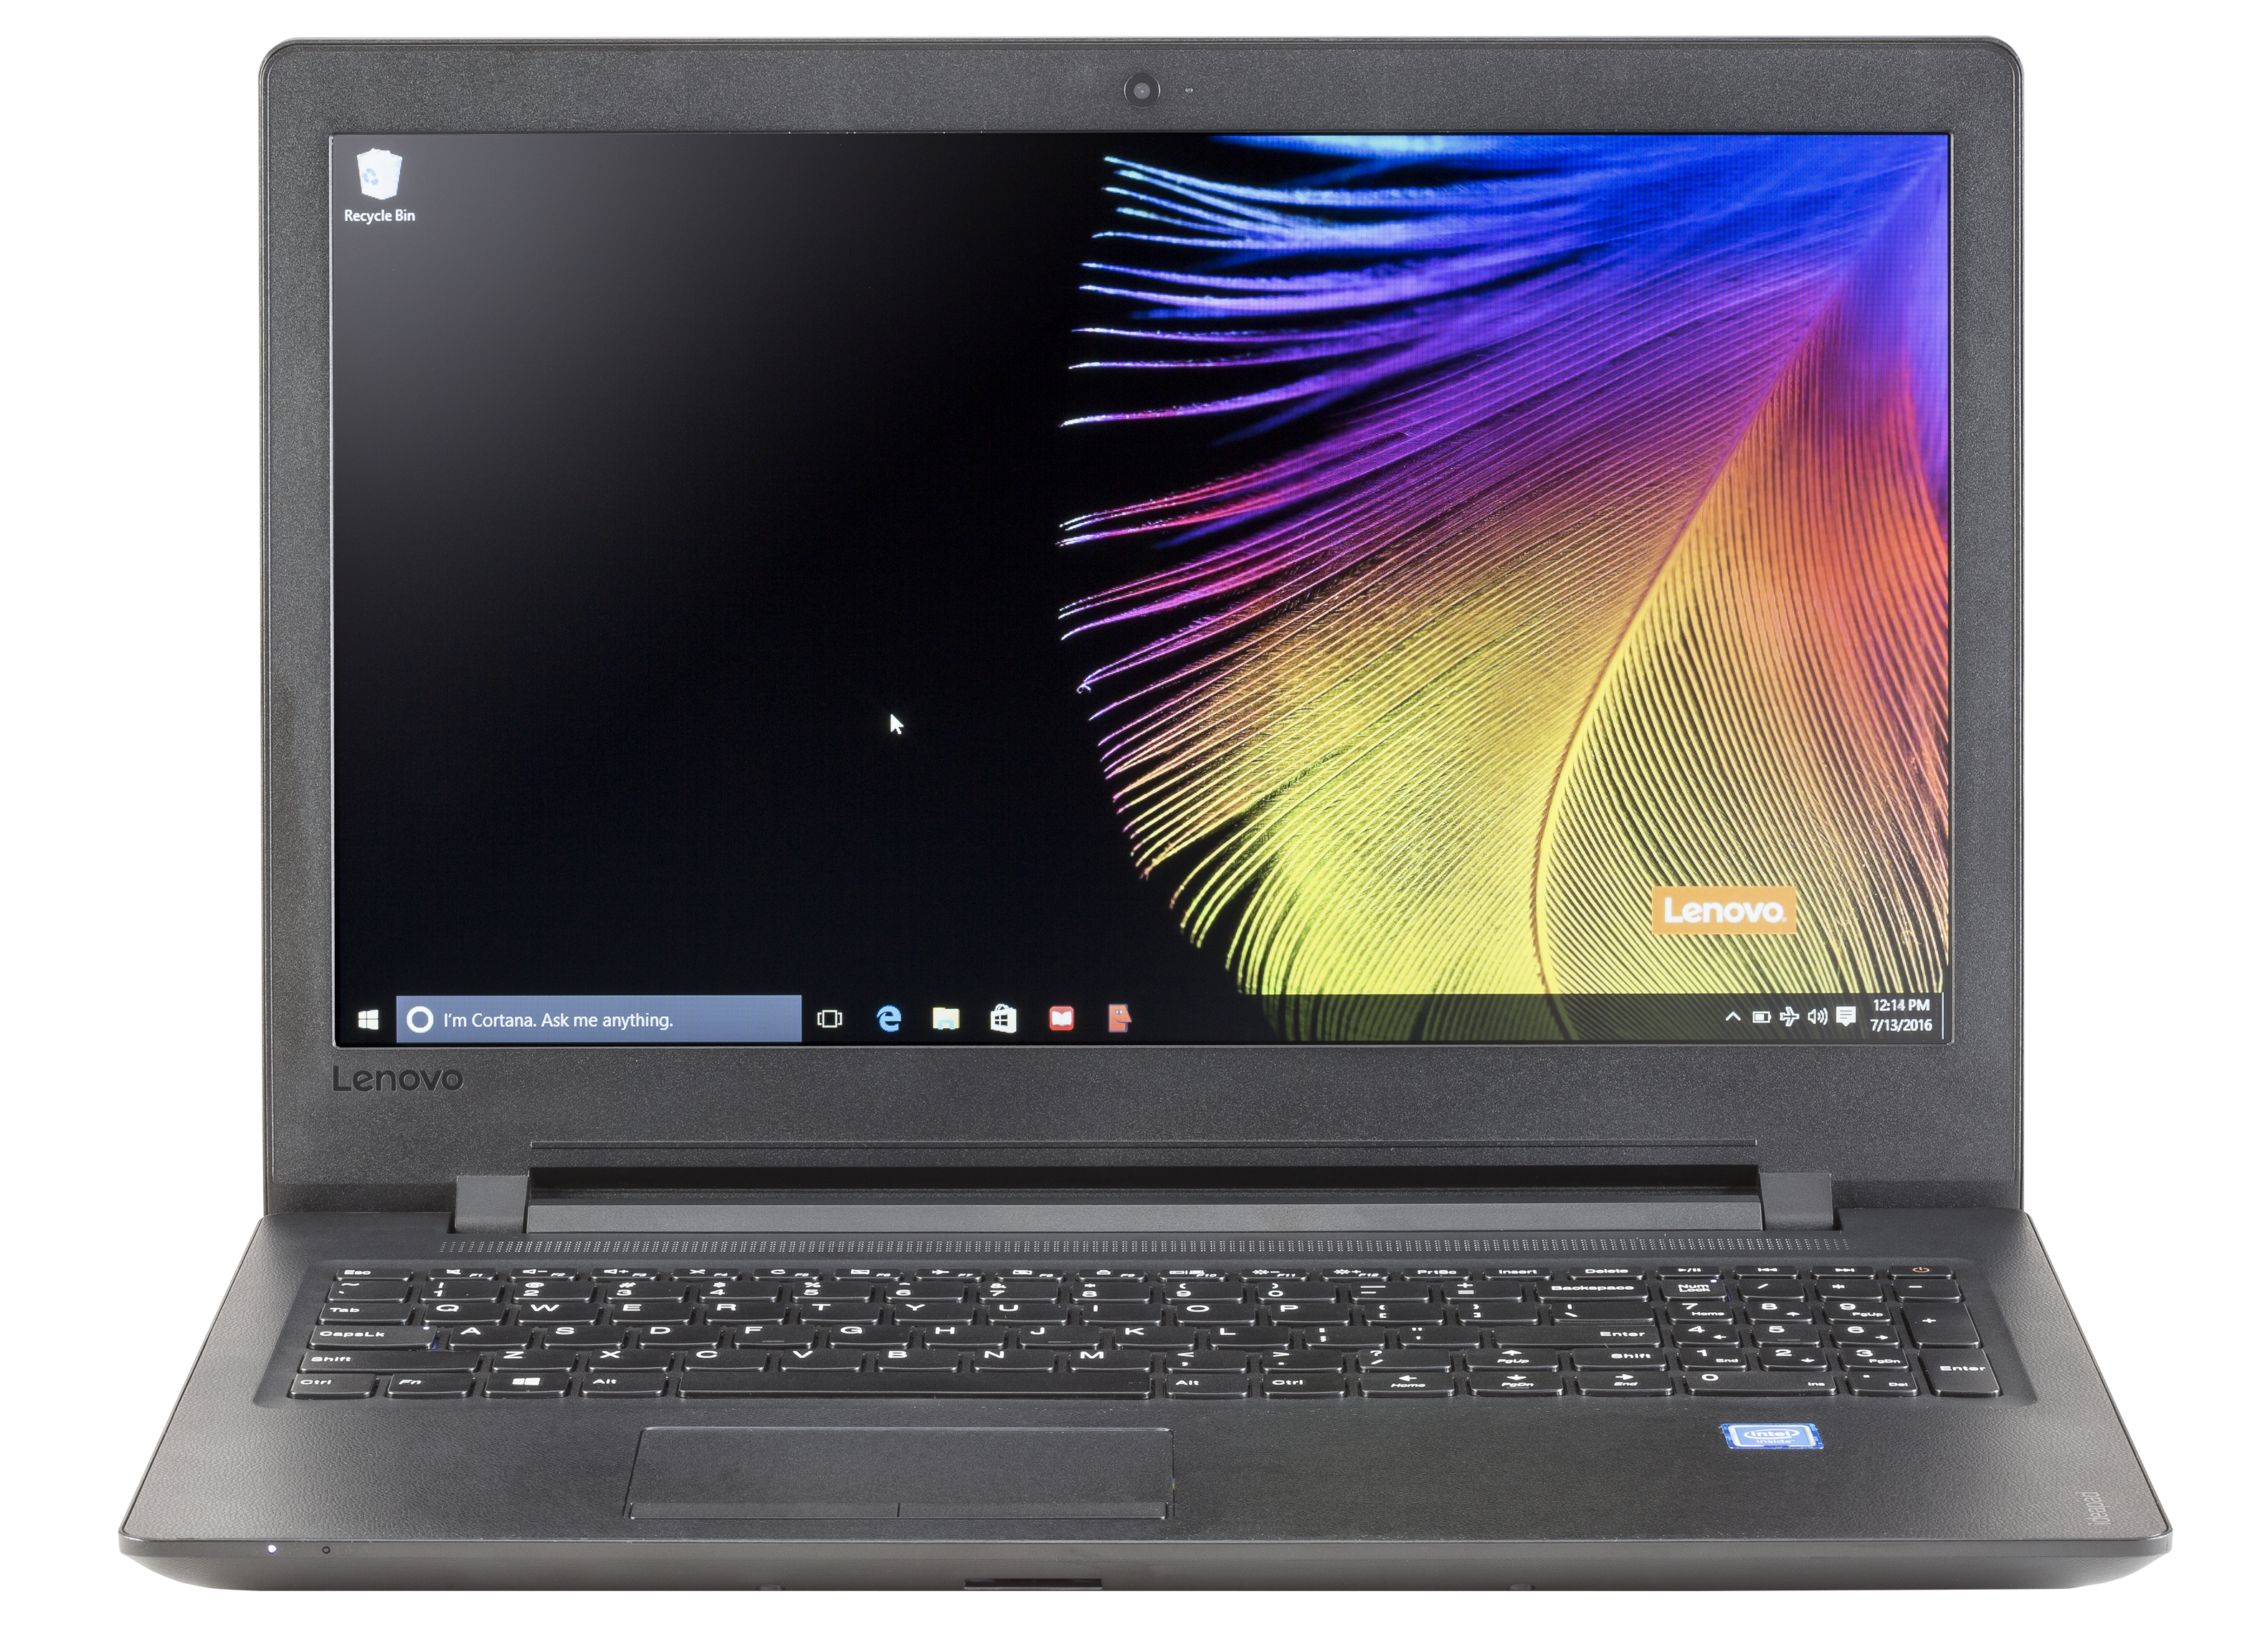 Lenovo 110-15IBR 80T7000HUS Laptop & Chromebook Review - Consumer Reports